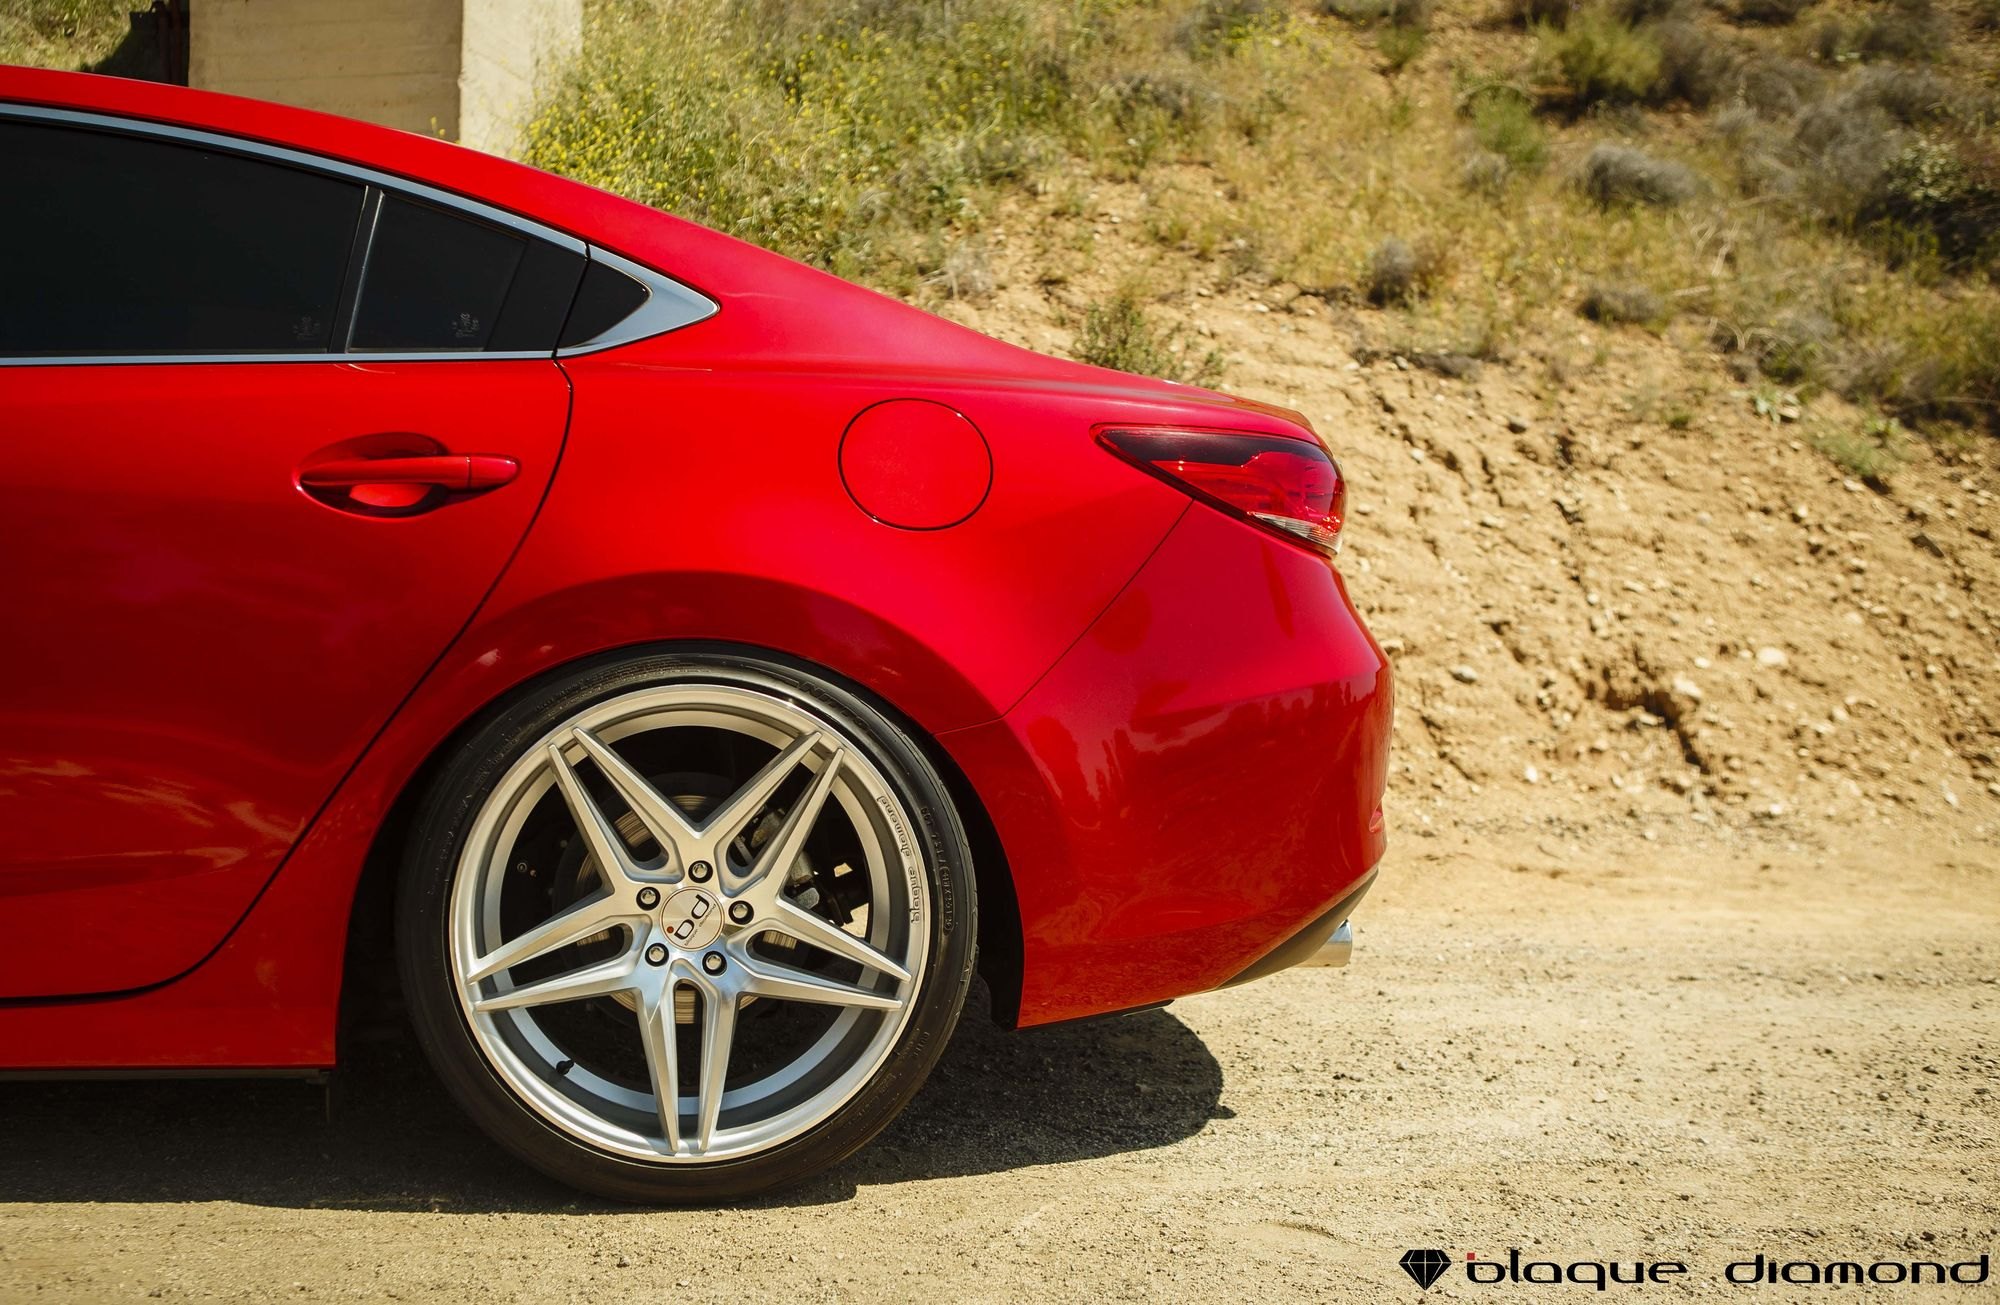 Red Mazda 6 with Silver Blaque Diamond Wheels - Photo by Blaque Diamond